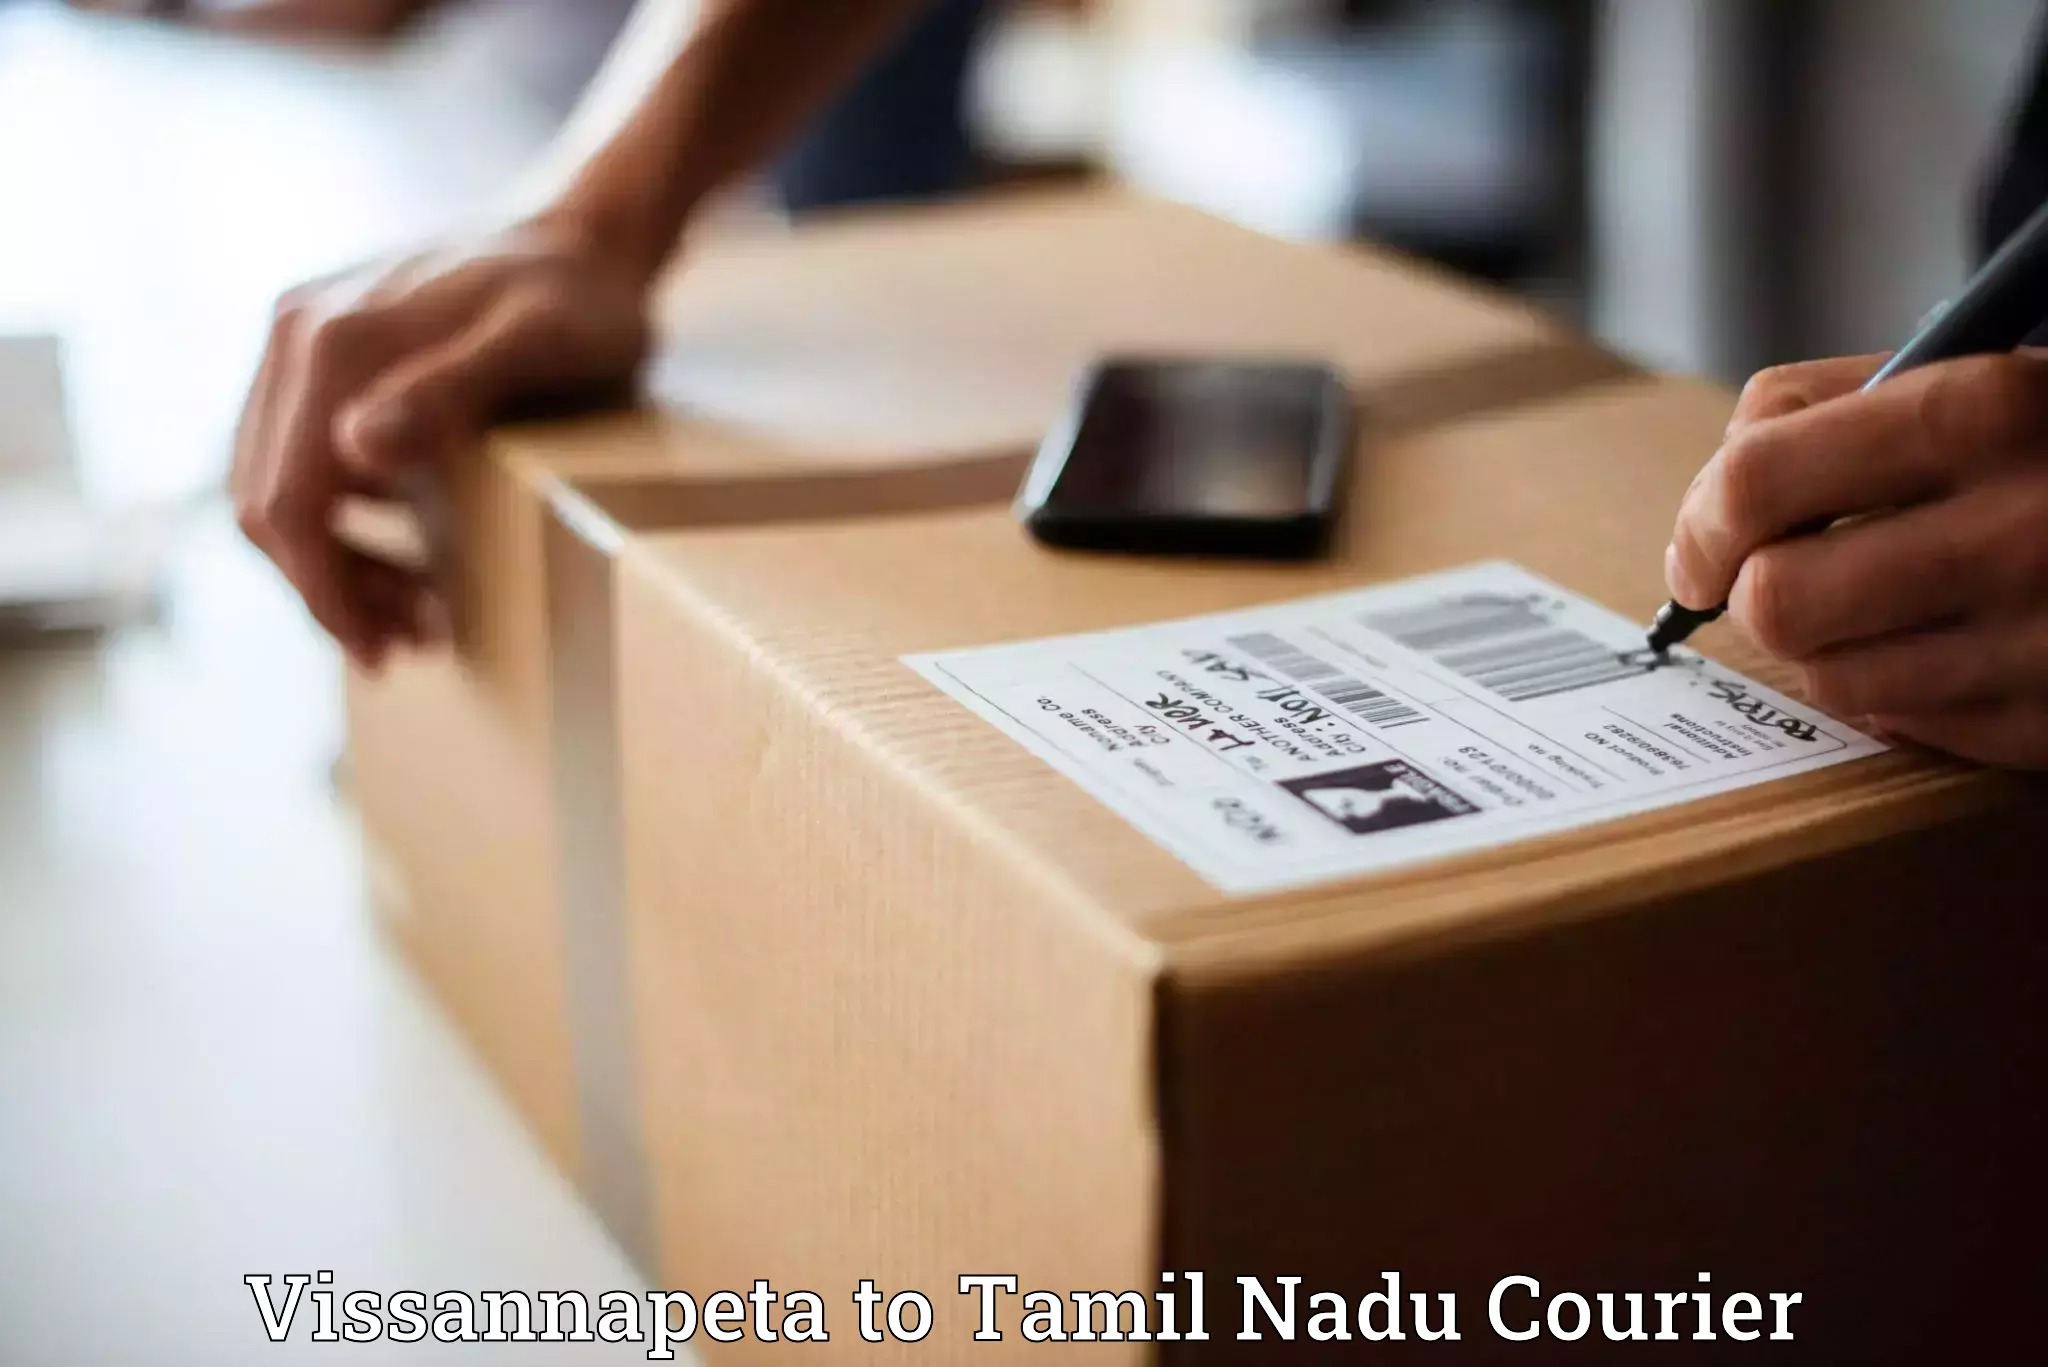 24/7 courier service Vissannapeta to Namakkal